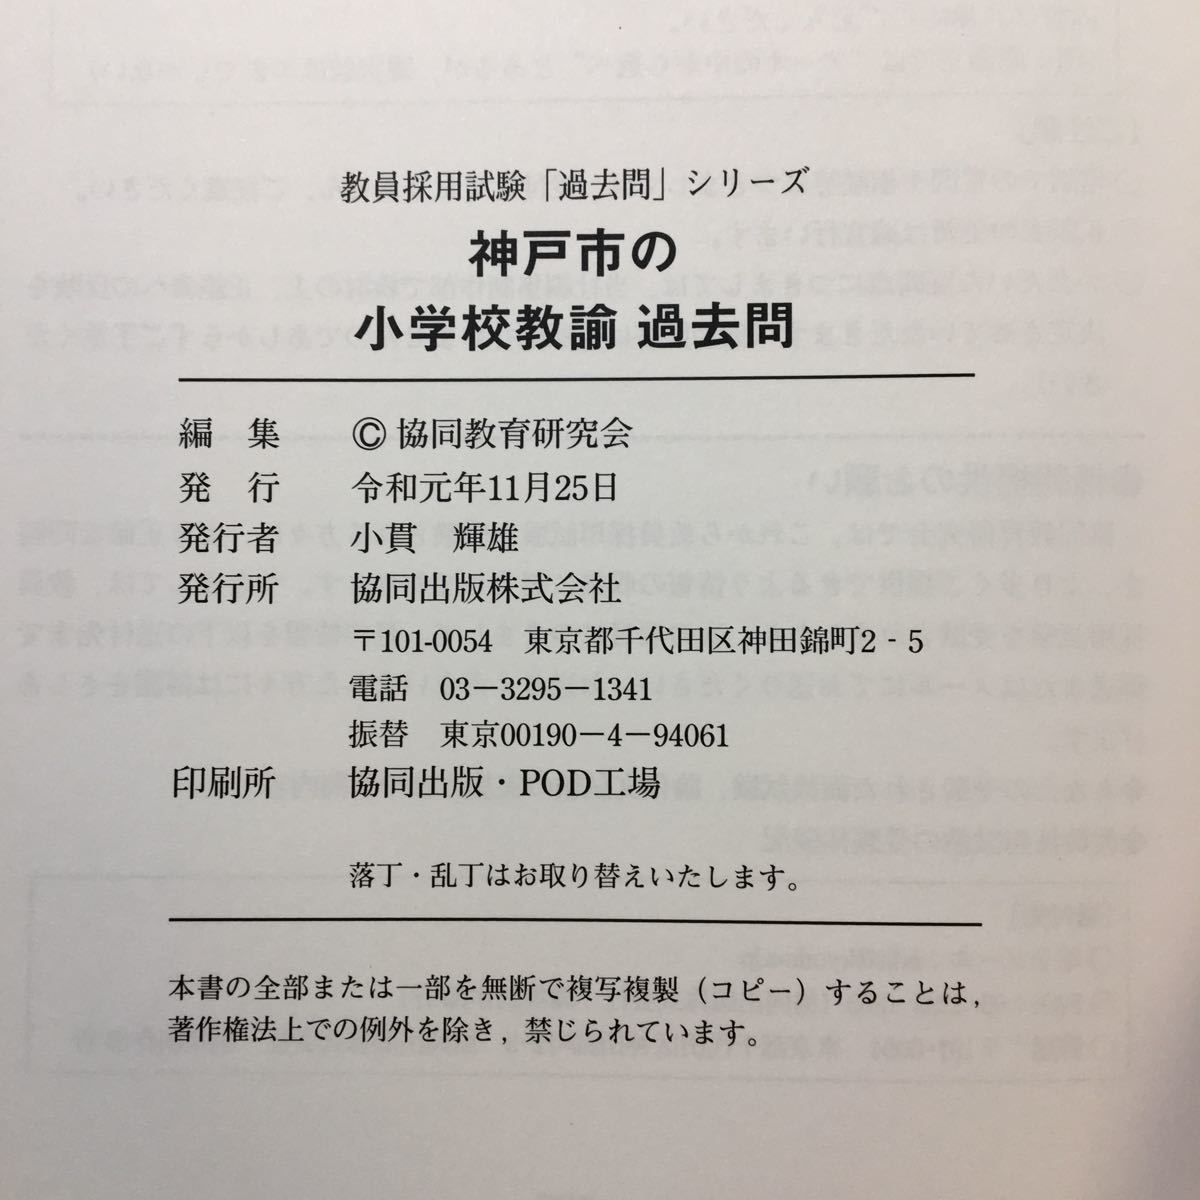 zaa-302! Kobe city. elementary school .. past .2021 fiscal year edition ( Kobe city. . member adoption examination [ past .] series ) separate volume 2019/11/1. same education research .( work )